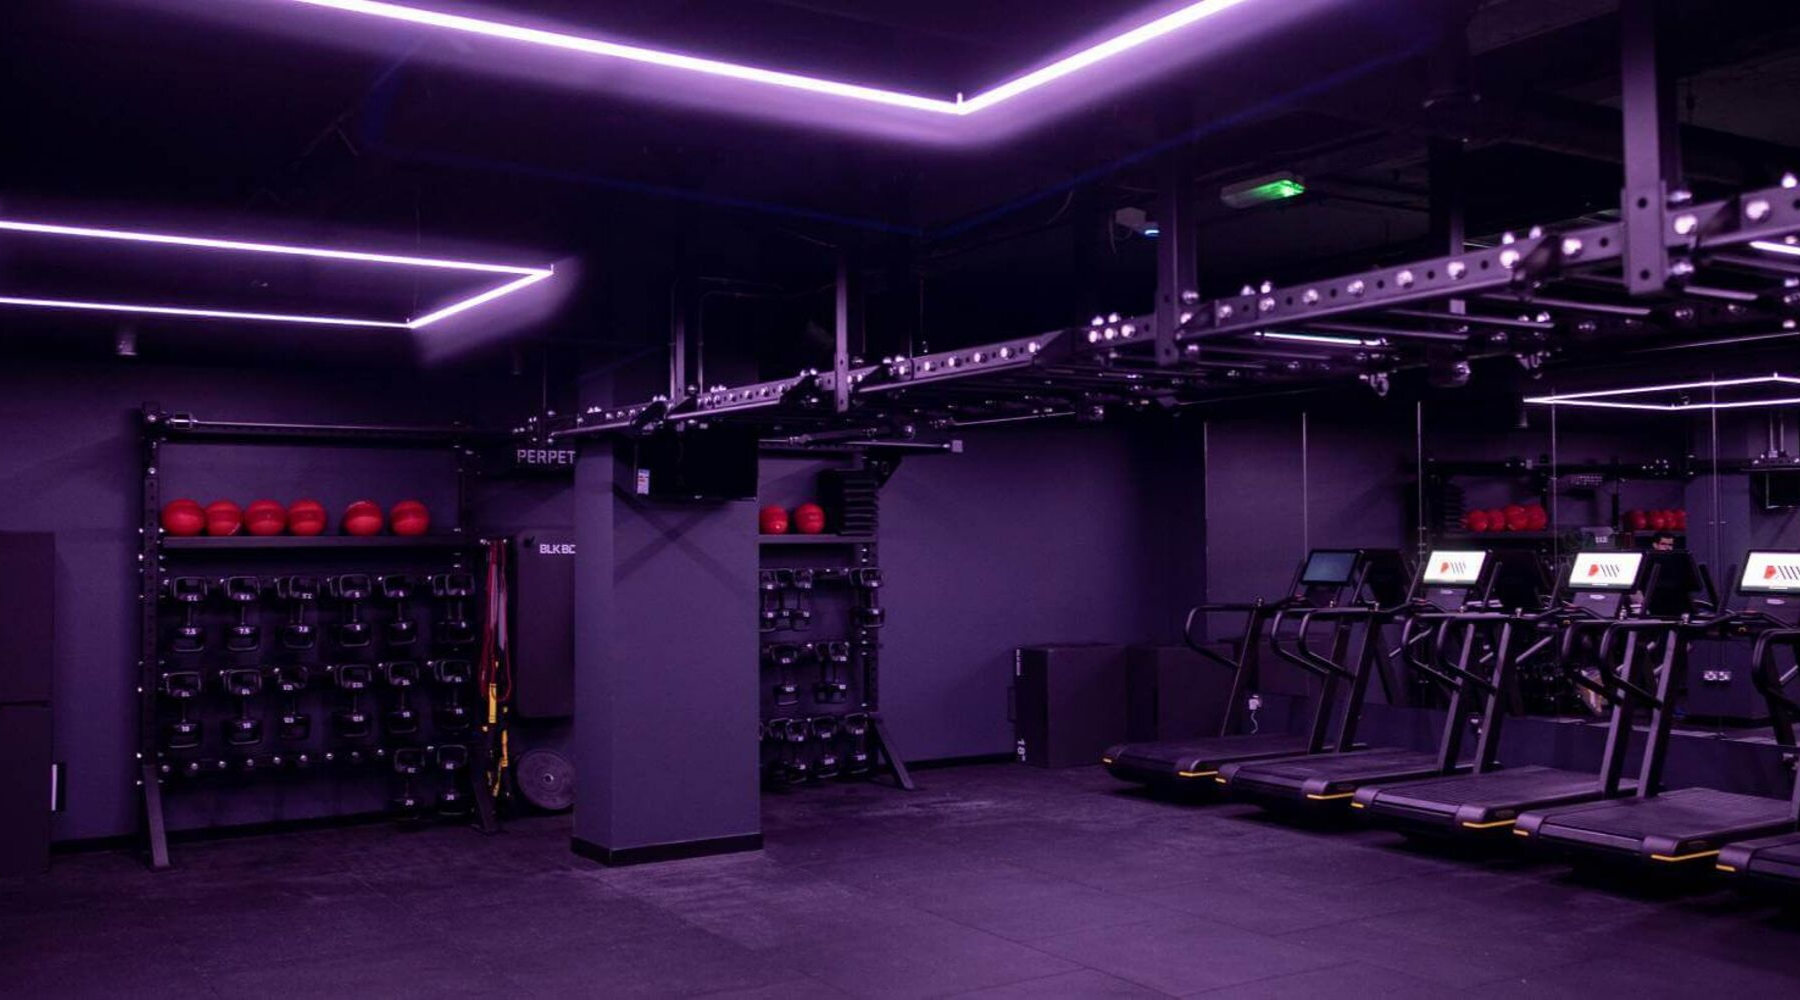 Perpetua Fitness Gym Facility, Dublin